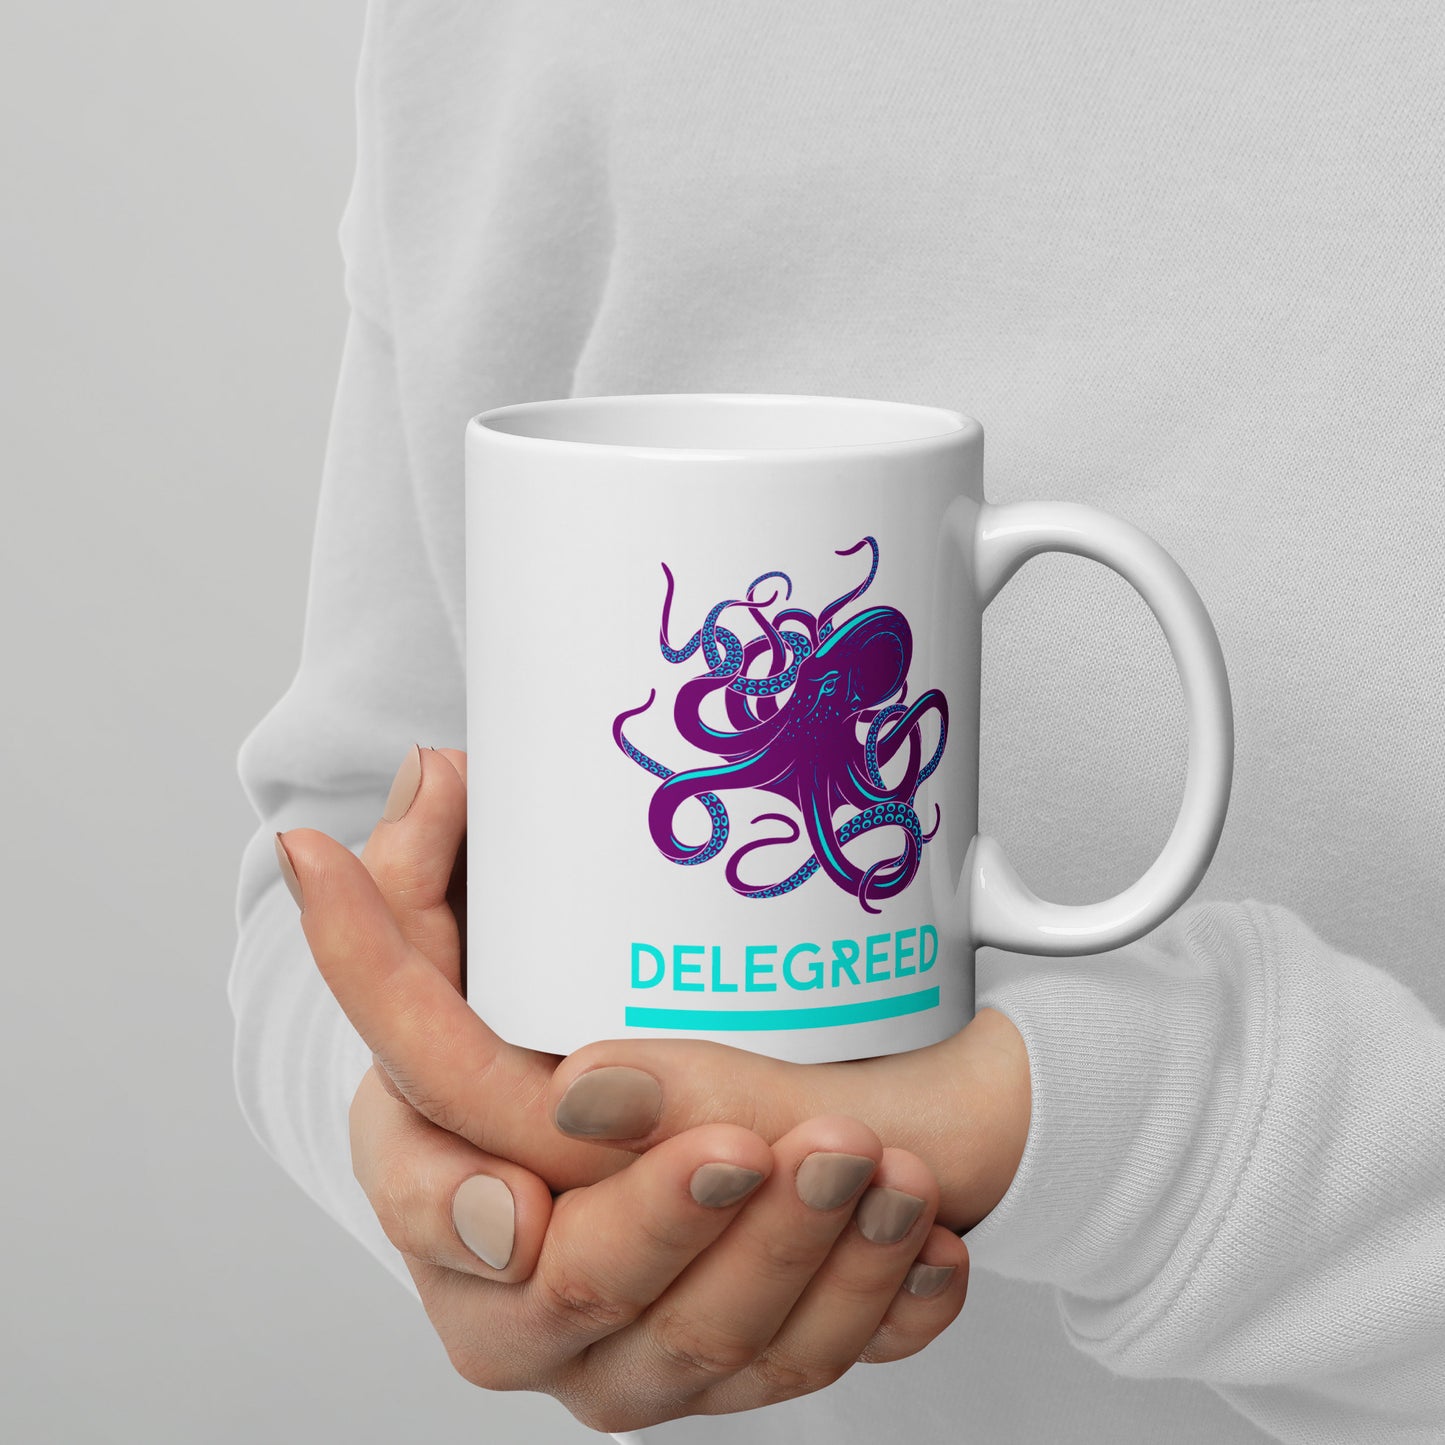 De Le Greed Octopus White Glossy Mug